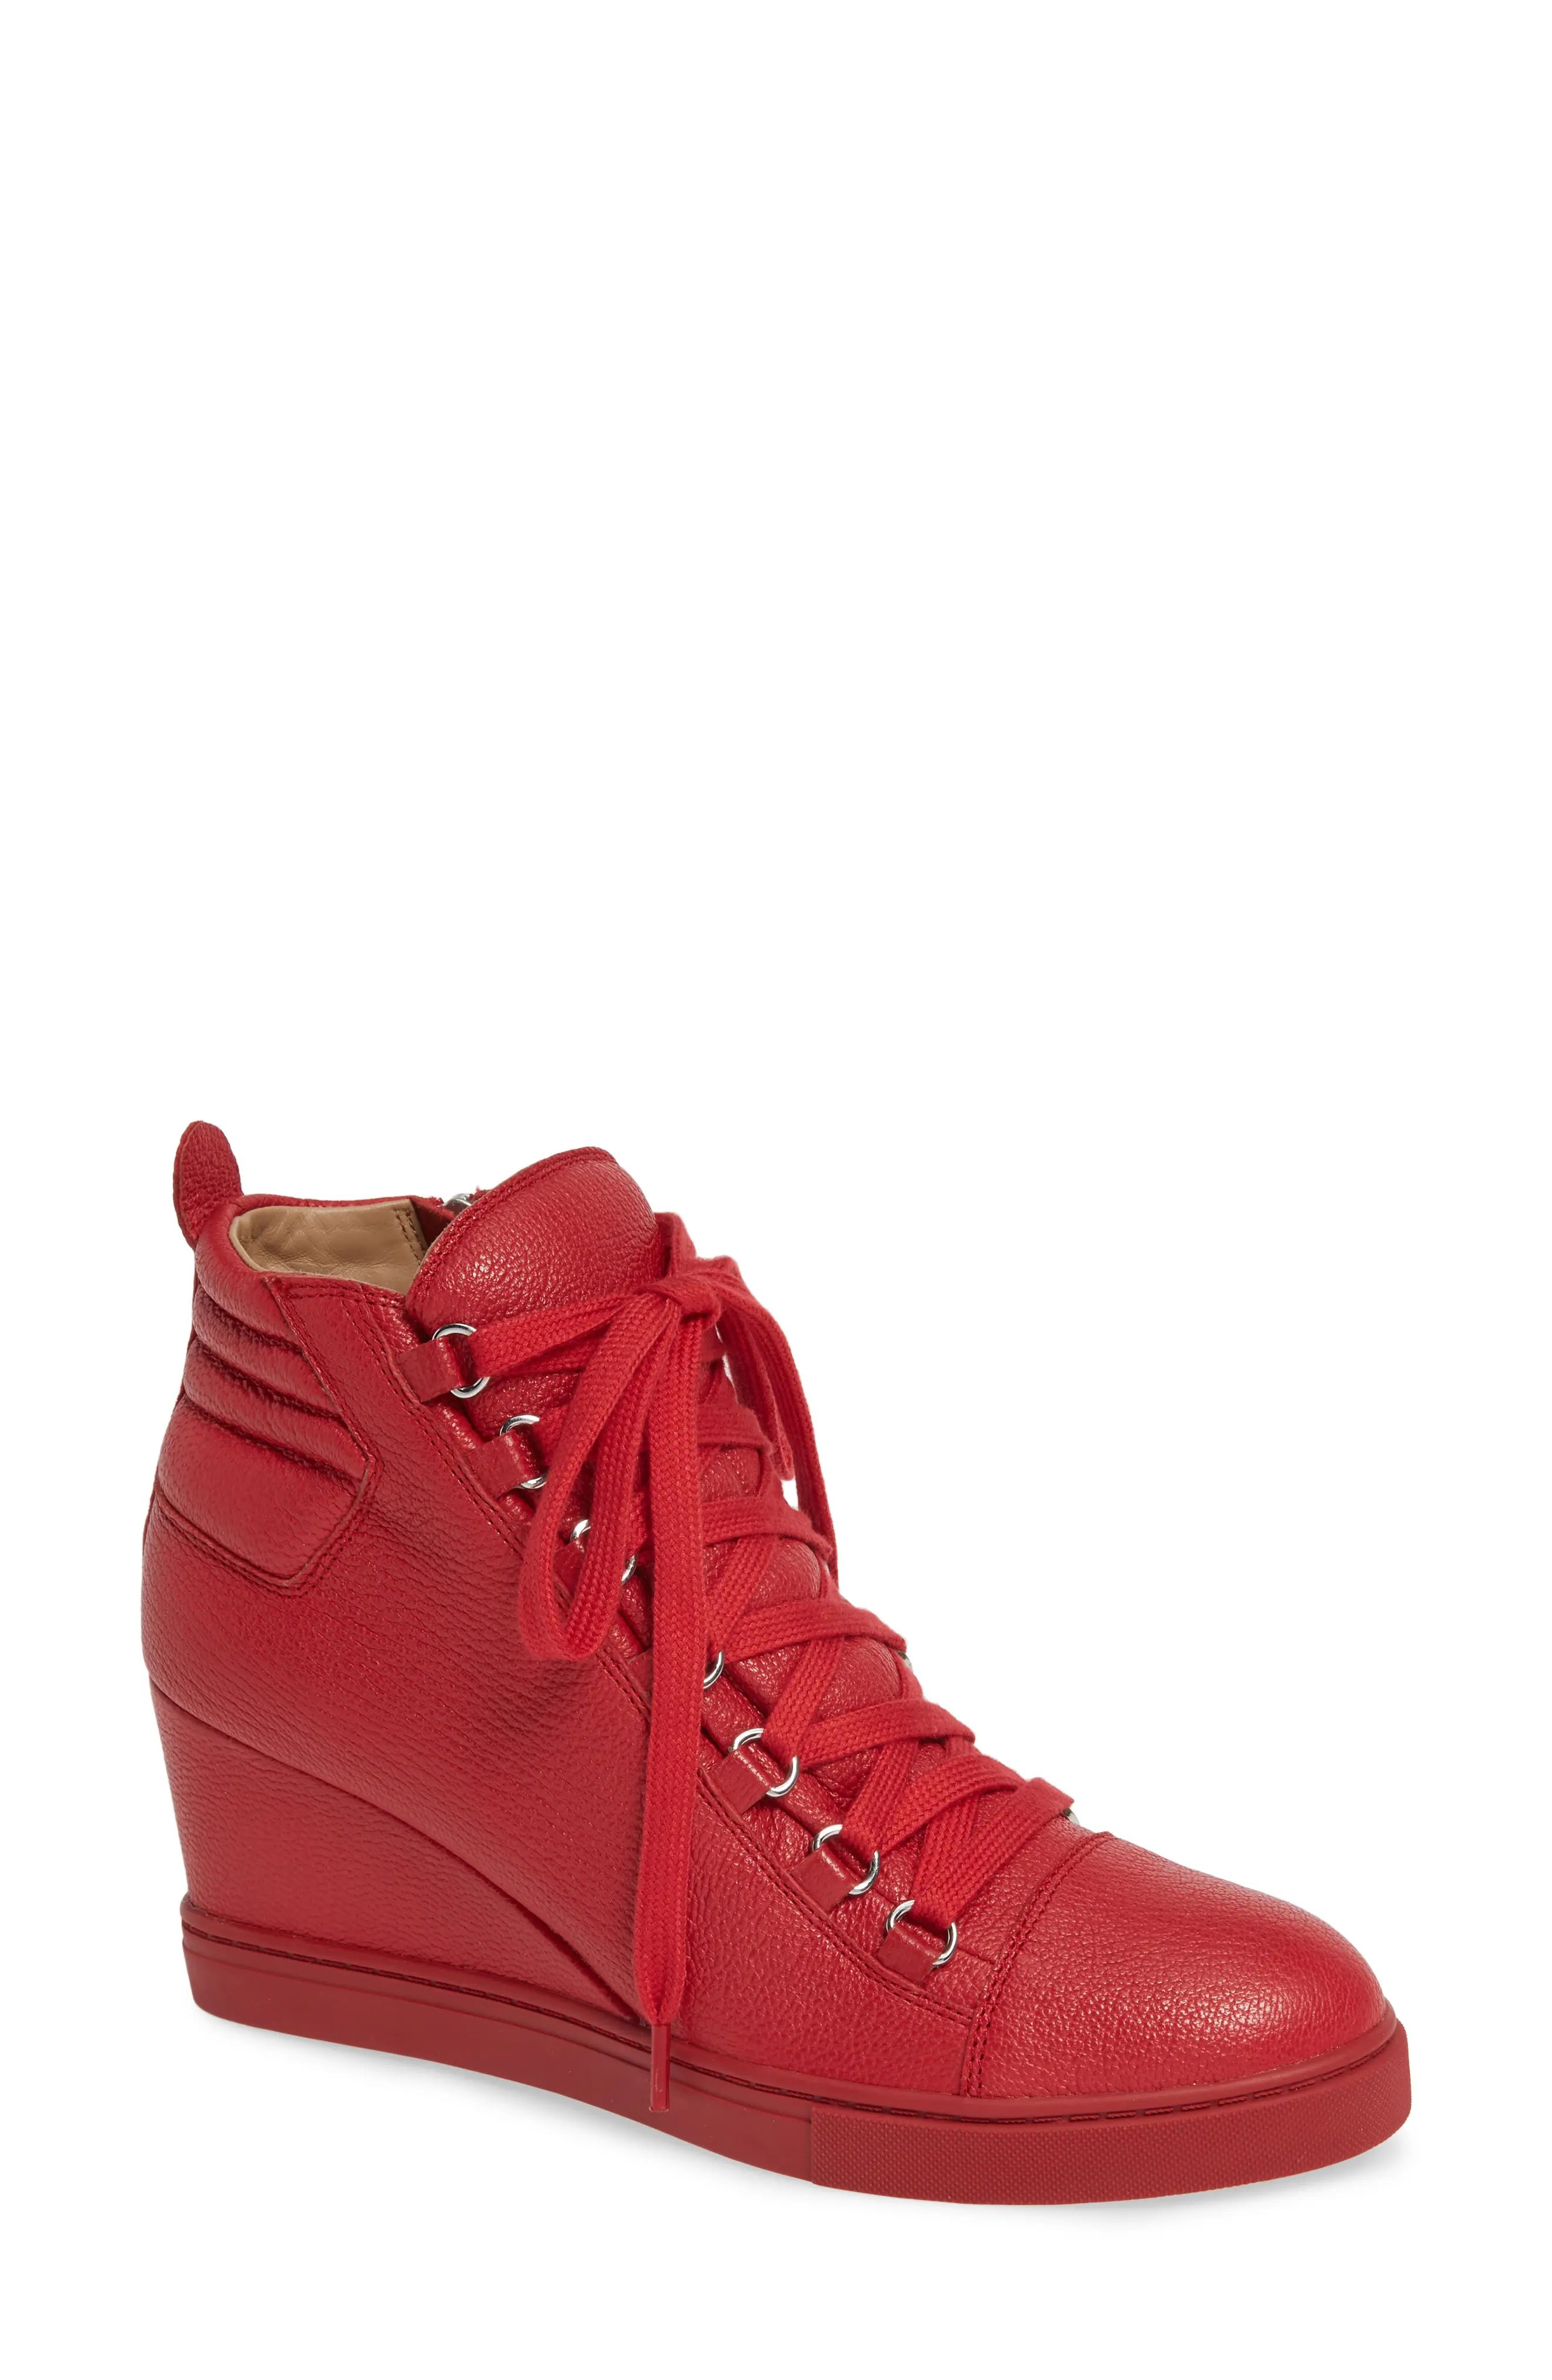 Women's Linea Paolo Fenton Wedge Sneaker, Size 7 M - Red | Nordstrom